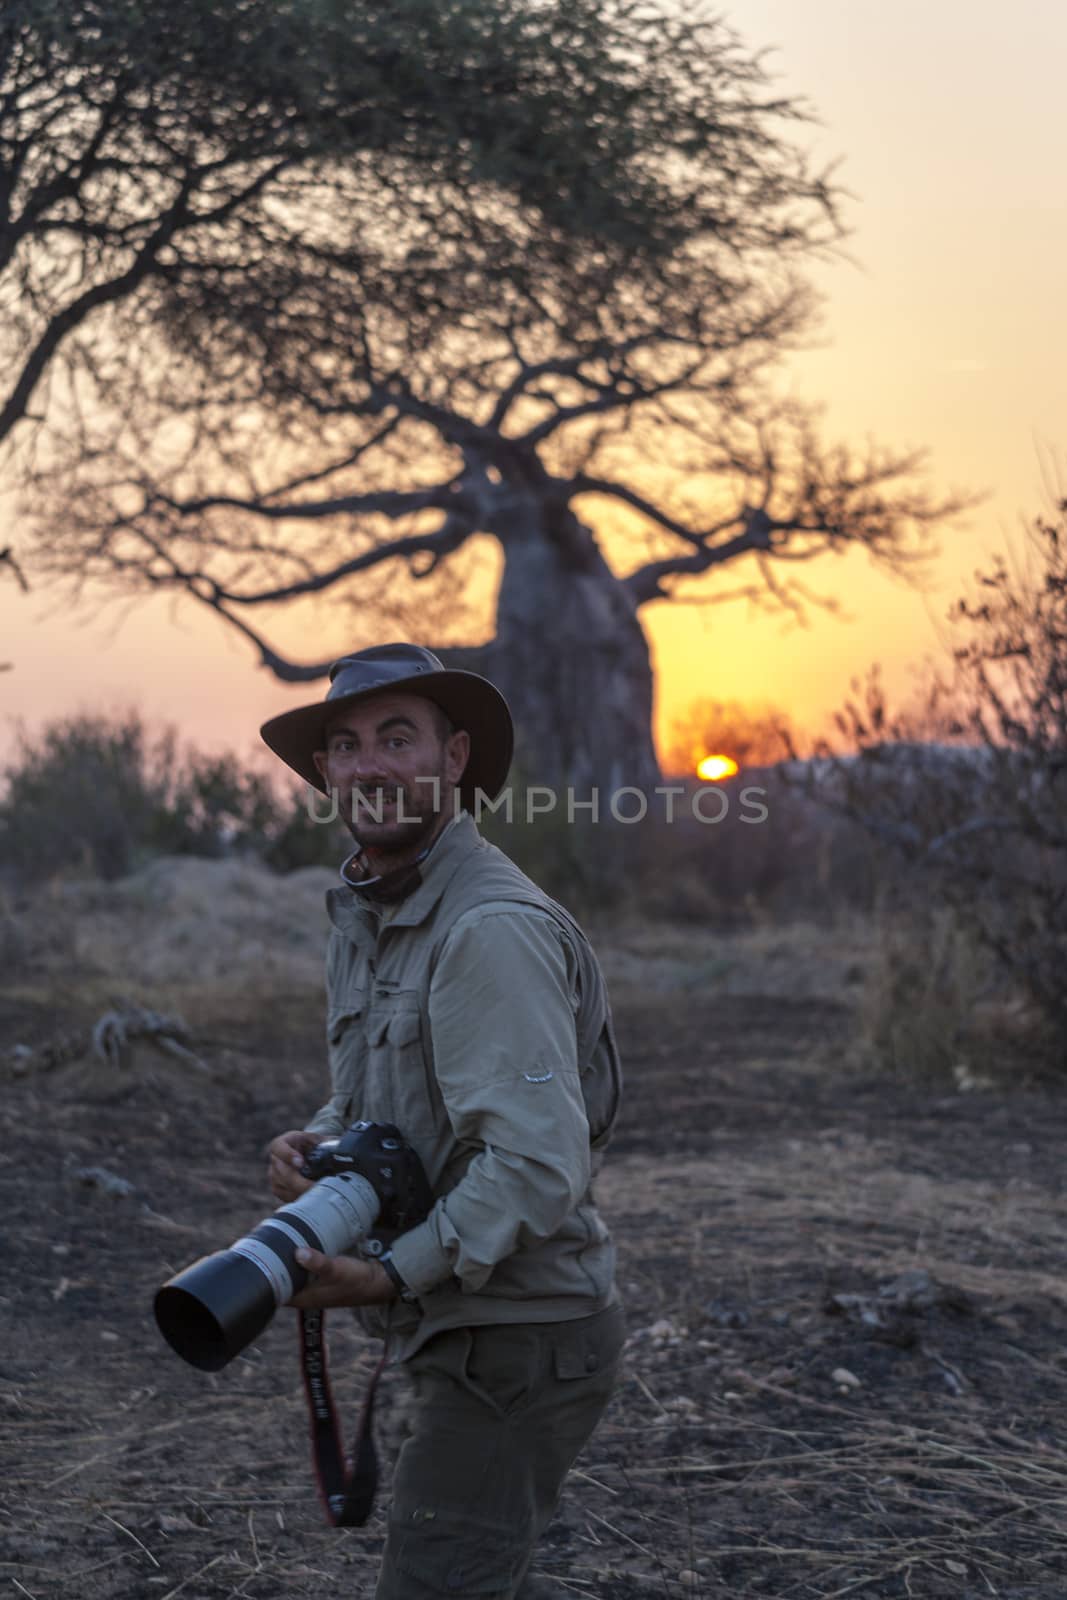 Mr. Trevor Meier in action.   Mr. Meier is a Australian famous wild life photographer specialized for African wildlife.